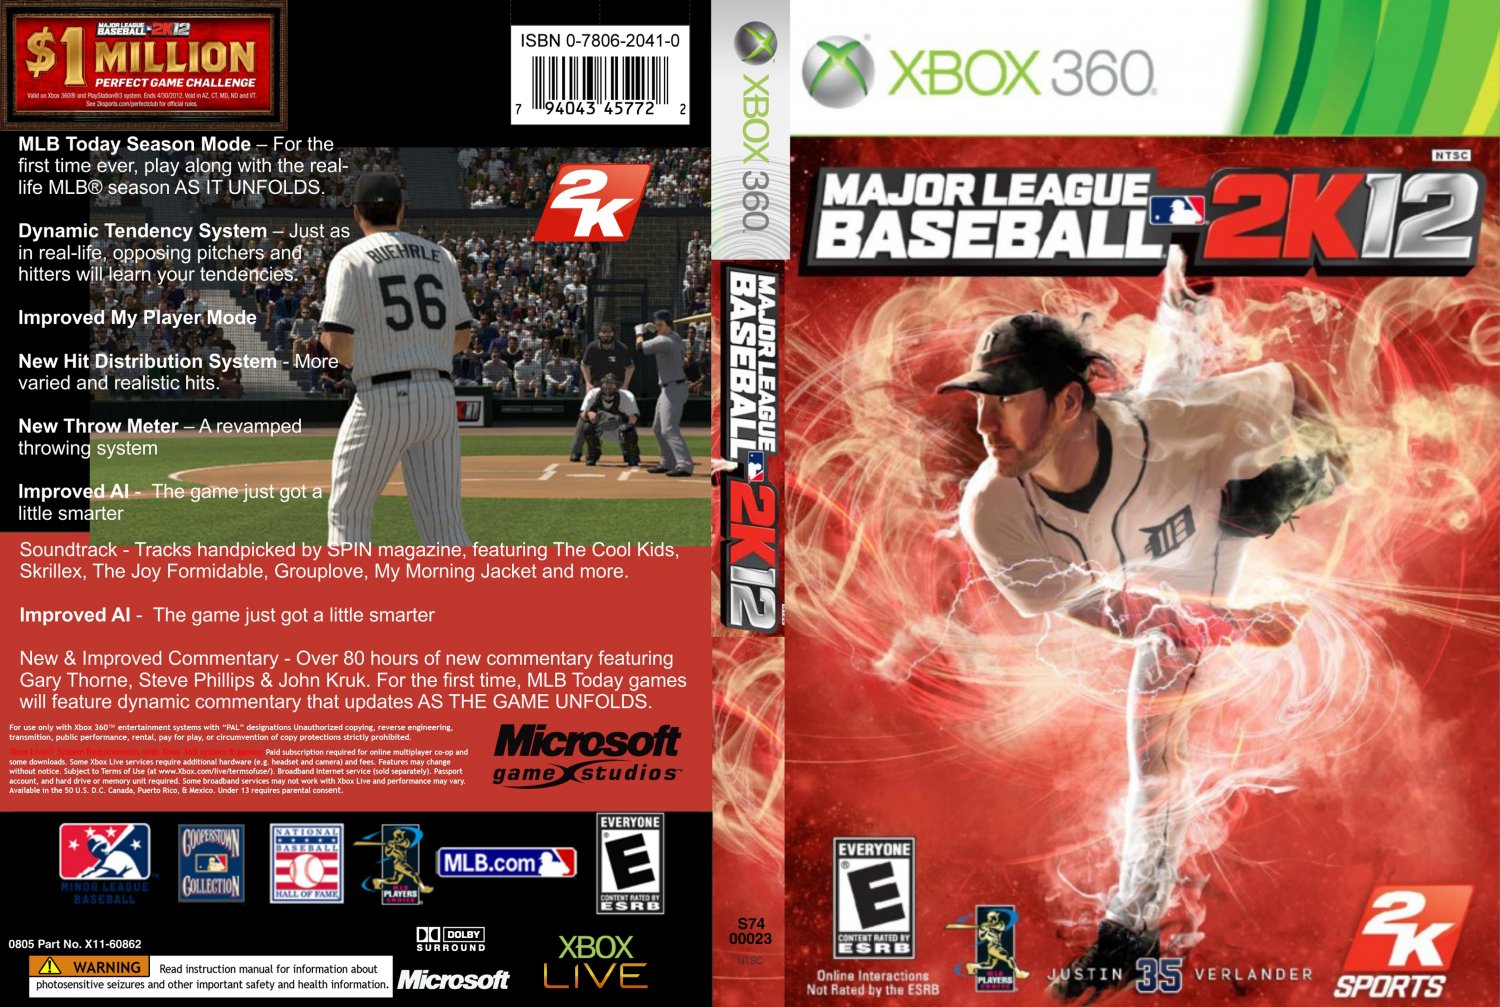 Major League Baseball 2K12 - XBOX 360 Game Covers